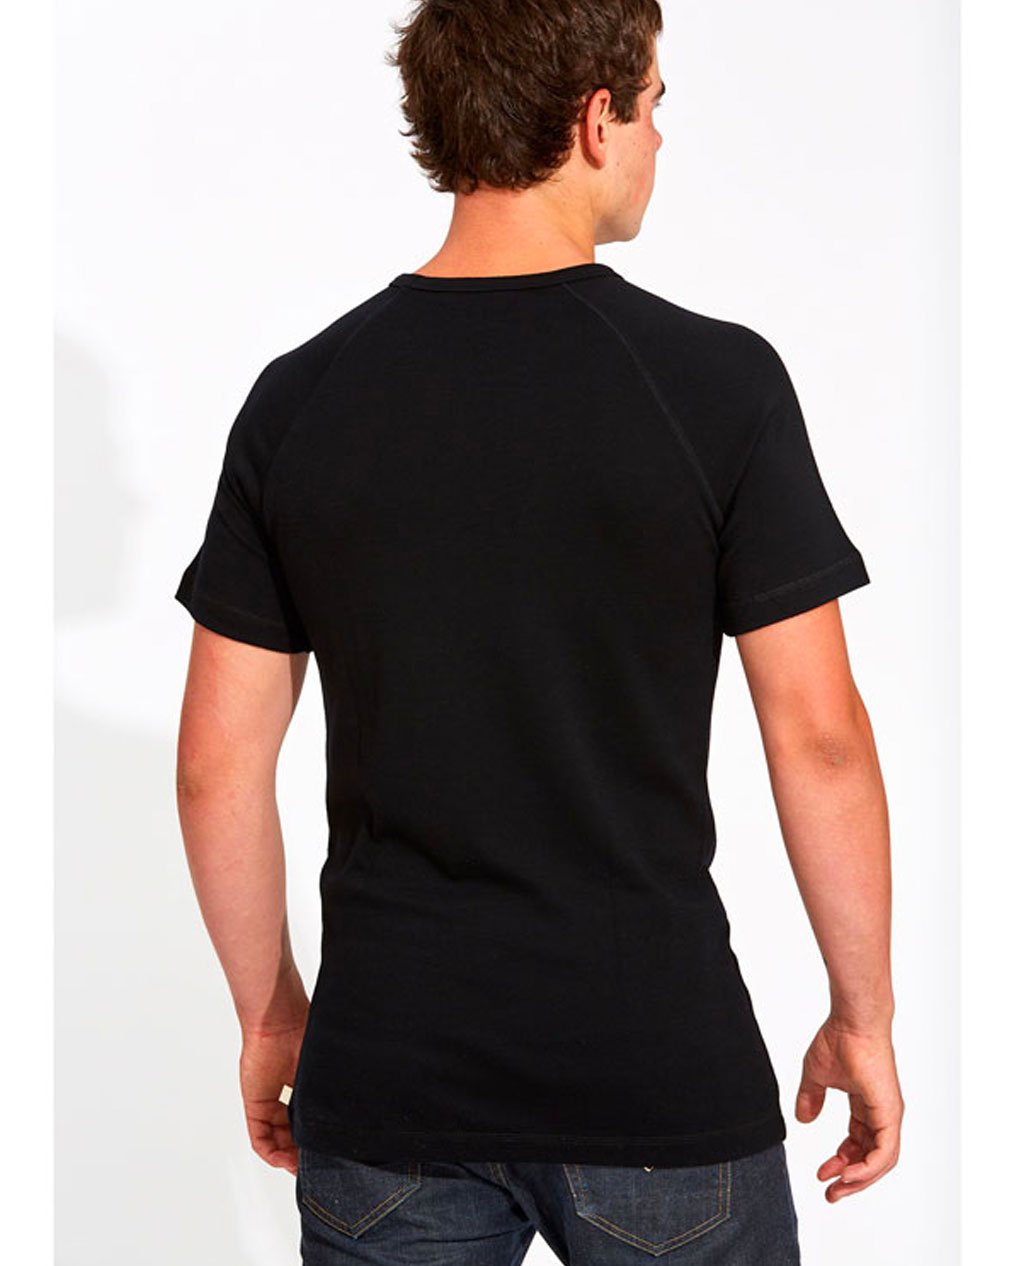 Woolerina Mens Short Sleeve Crew T-Shirt - Model